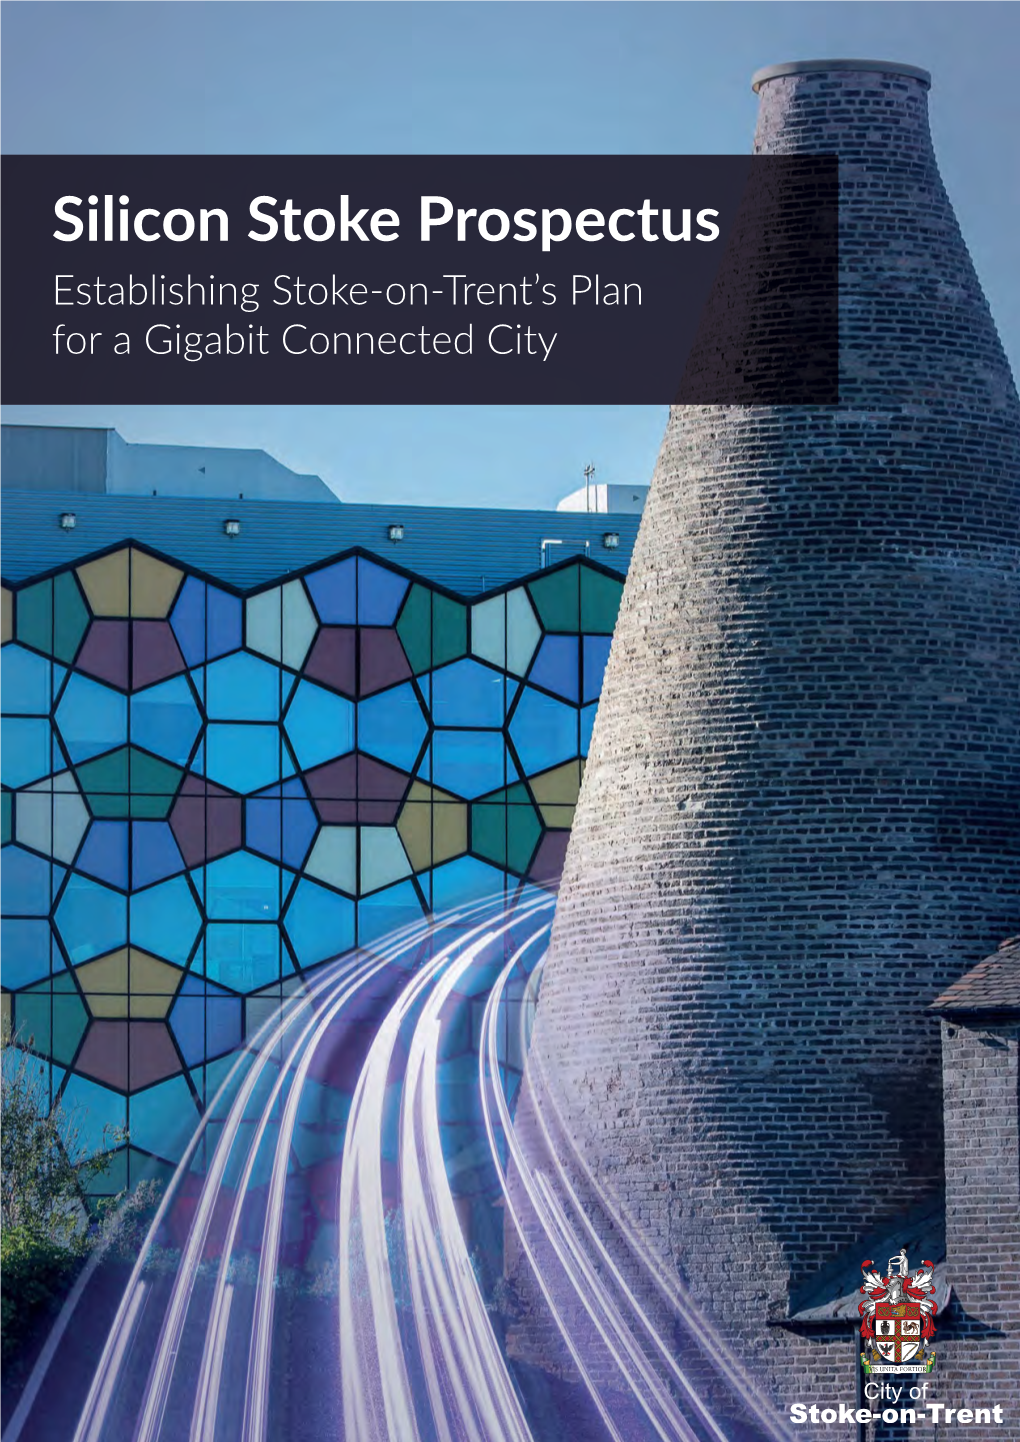 Read the Silicon Stoke Prospectus Here